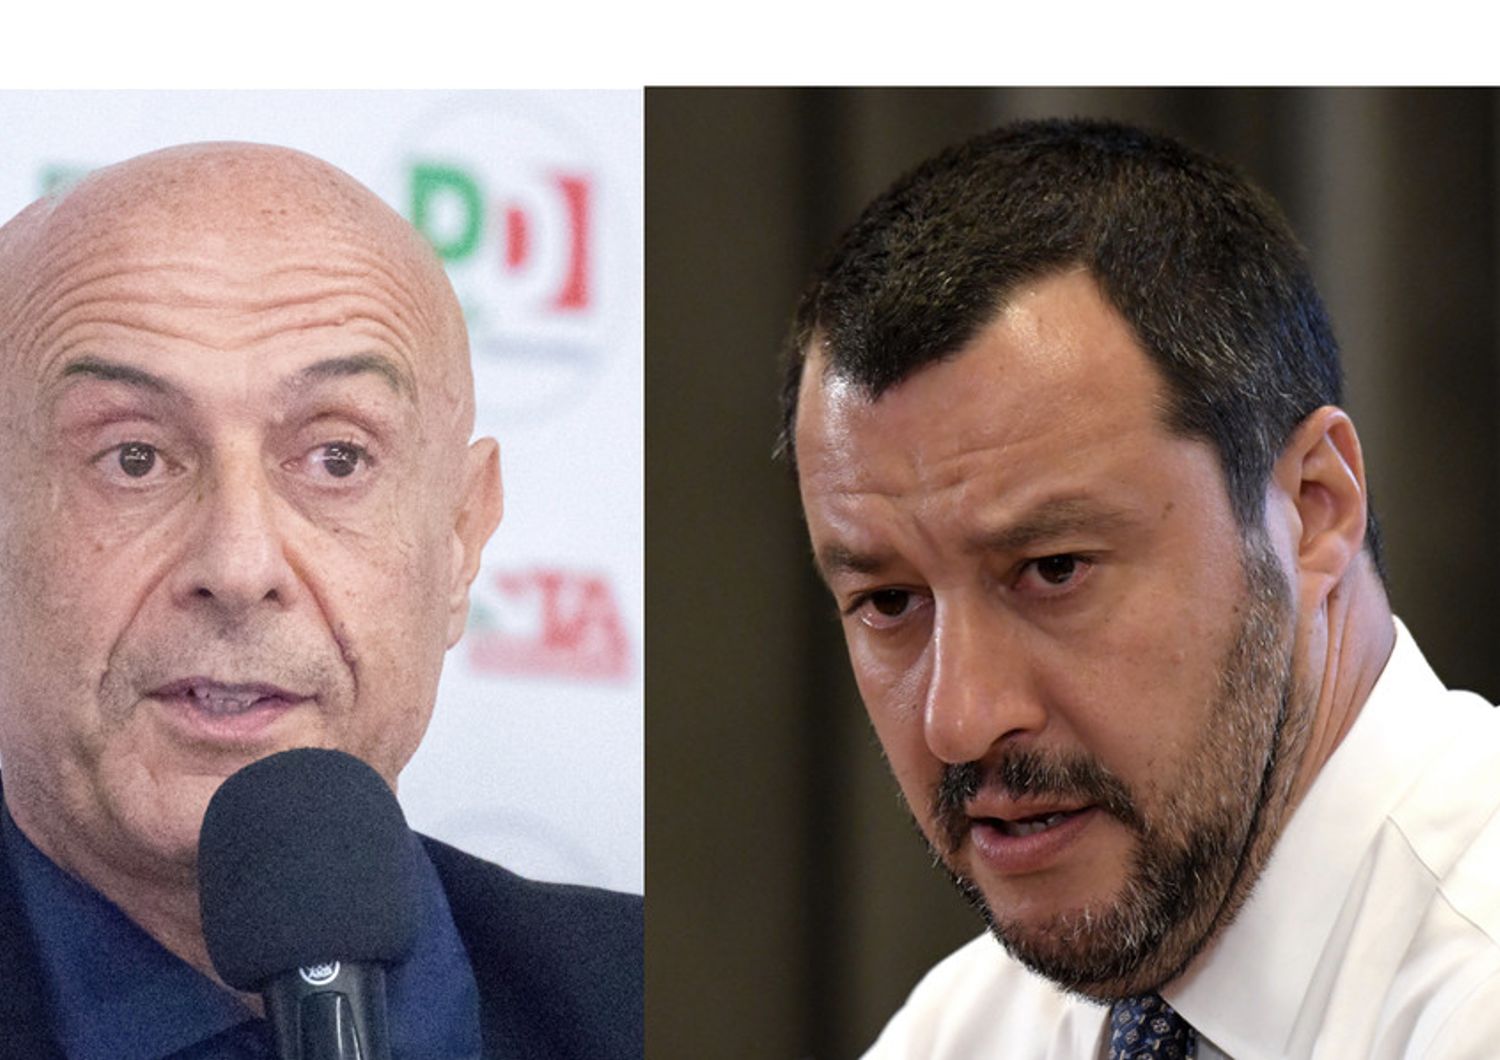 &nbsp;Marco Minniti e Matteo Salvini